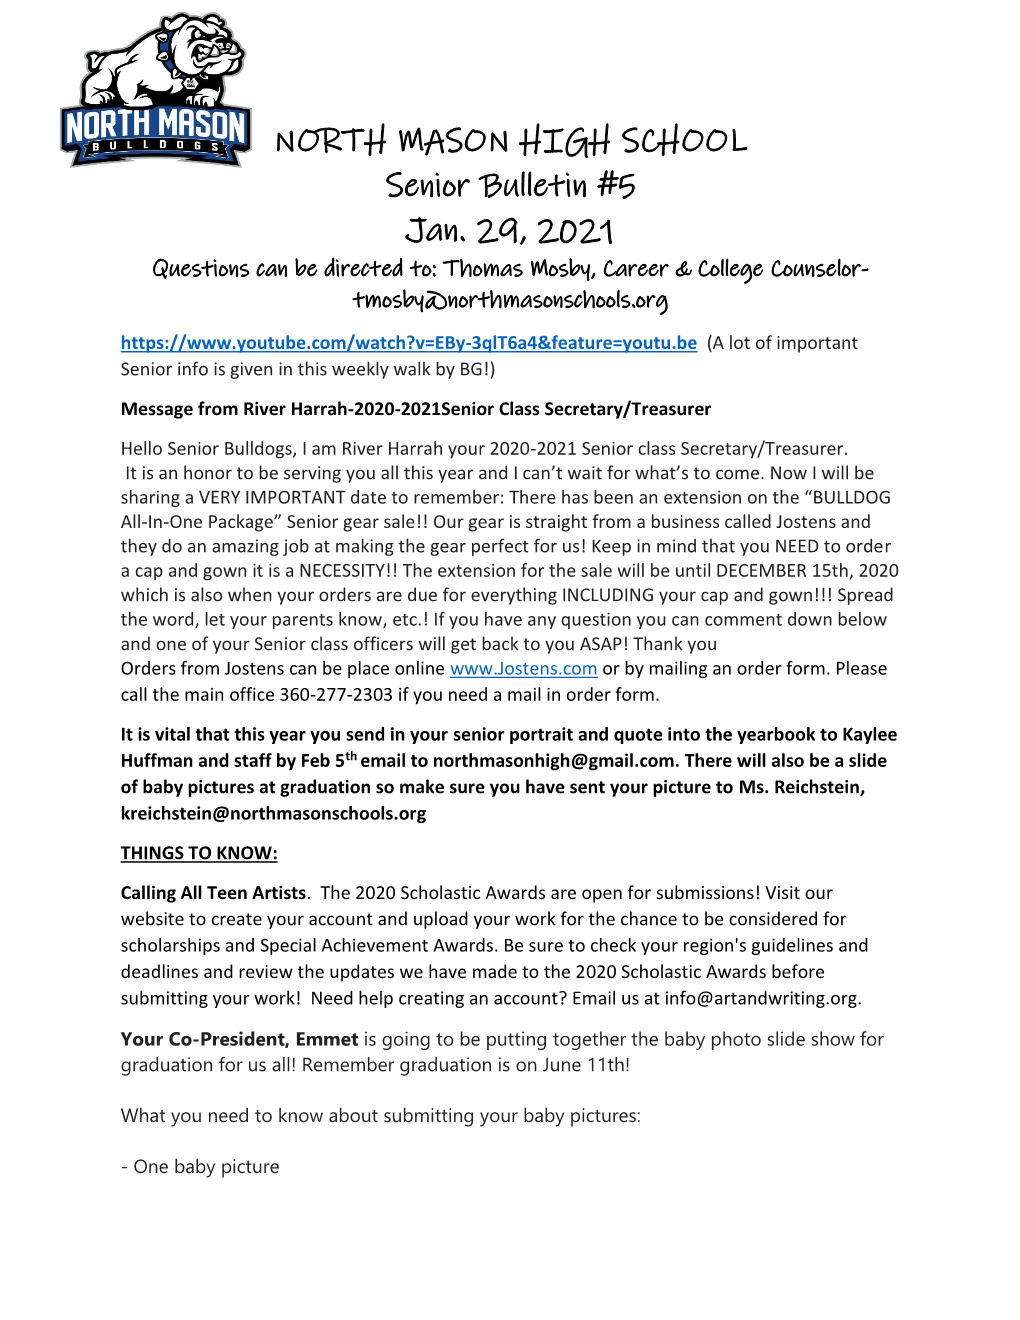 NORTH MASON HIGH SCHOOL Senior Bulletin #5 Jan. 29, 2021